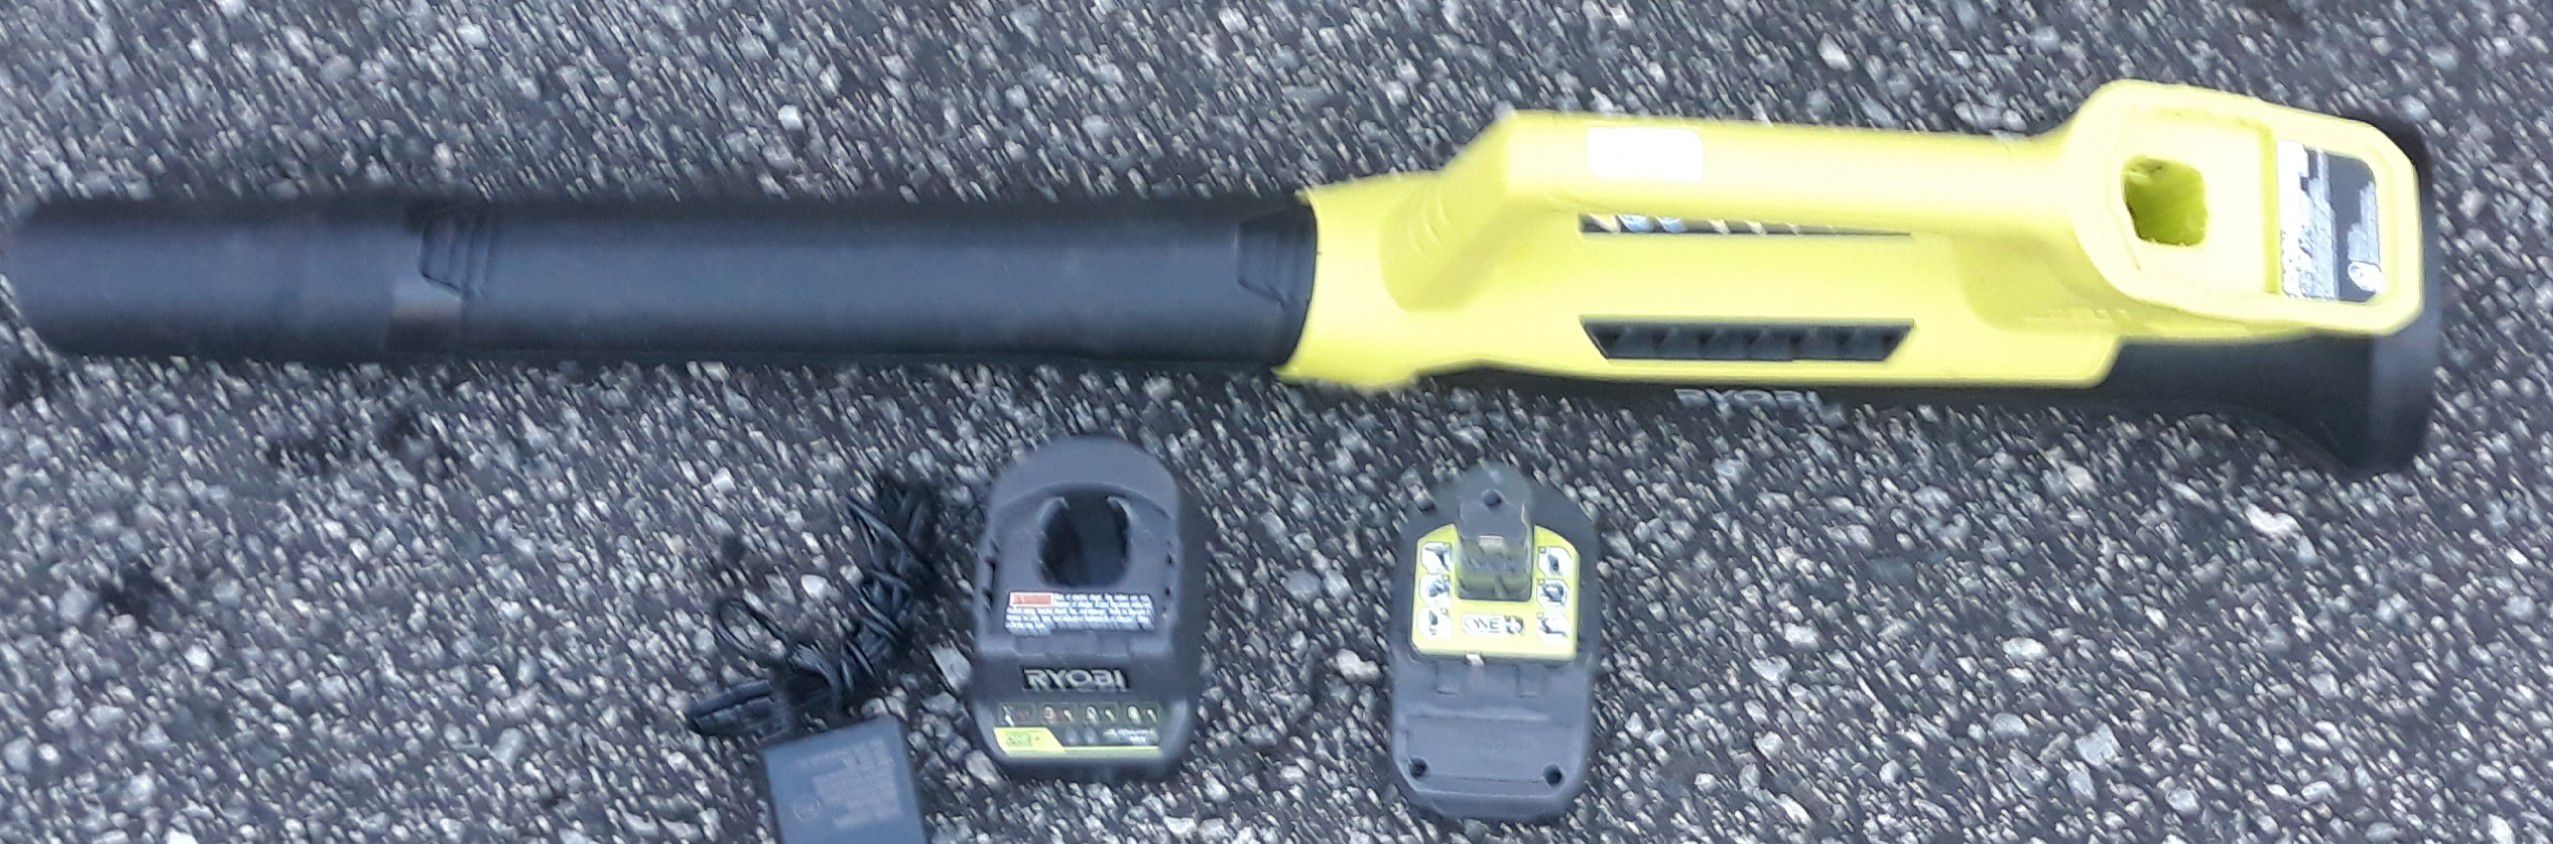 Ryobi 18 volt leaf blower kit